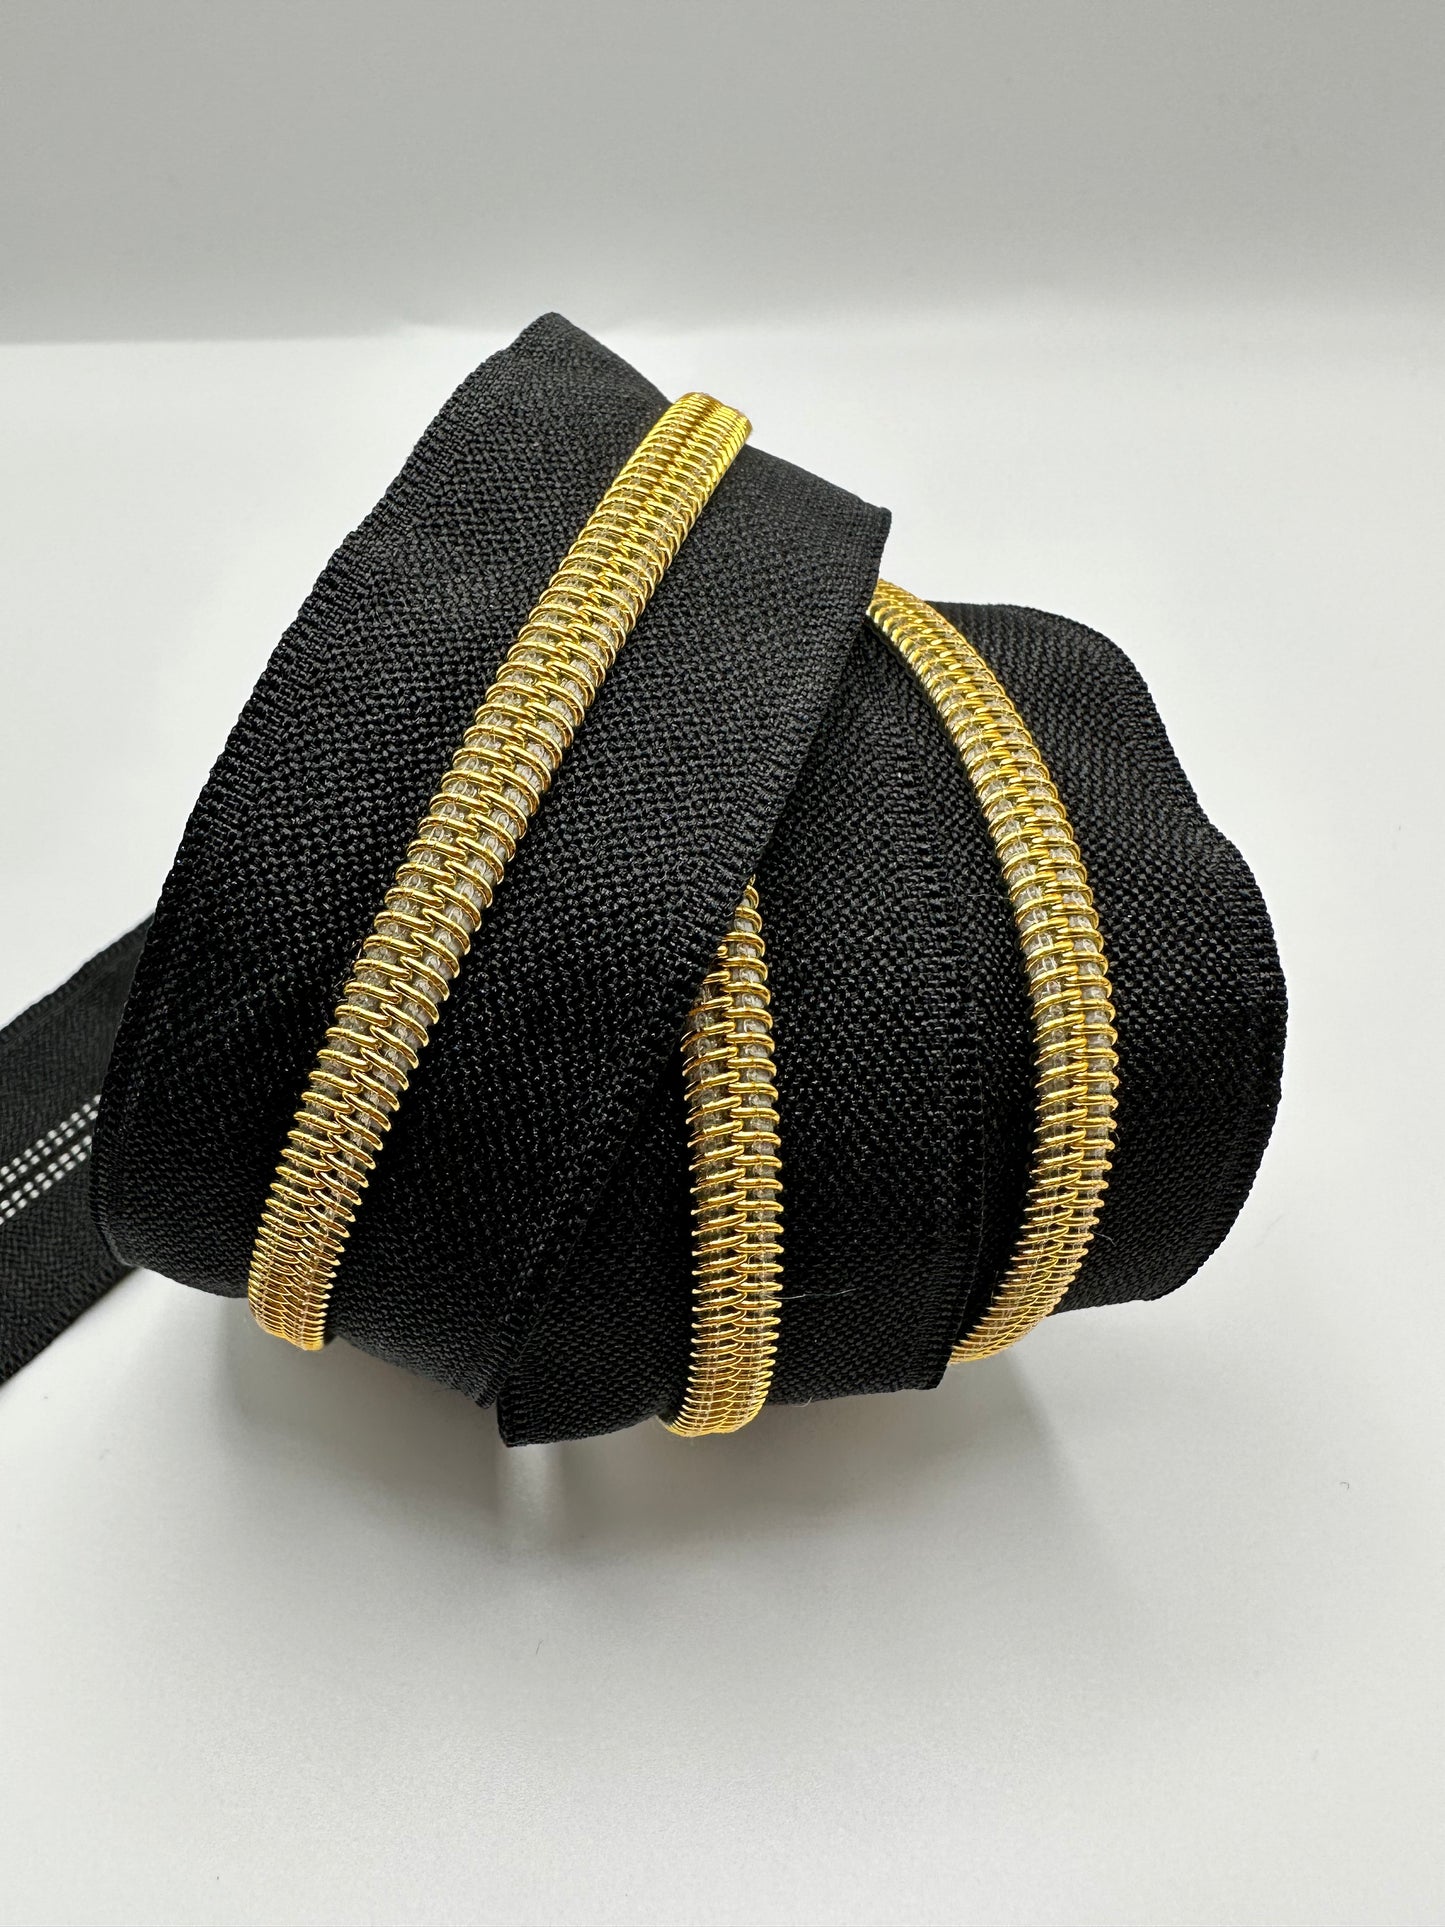 Gold teeth on Black zipper tape